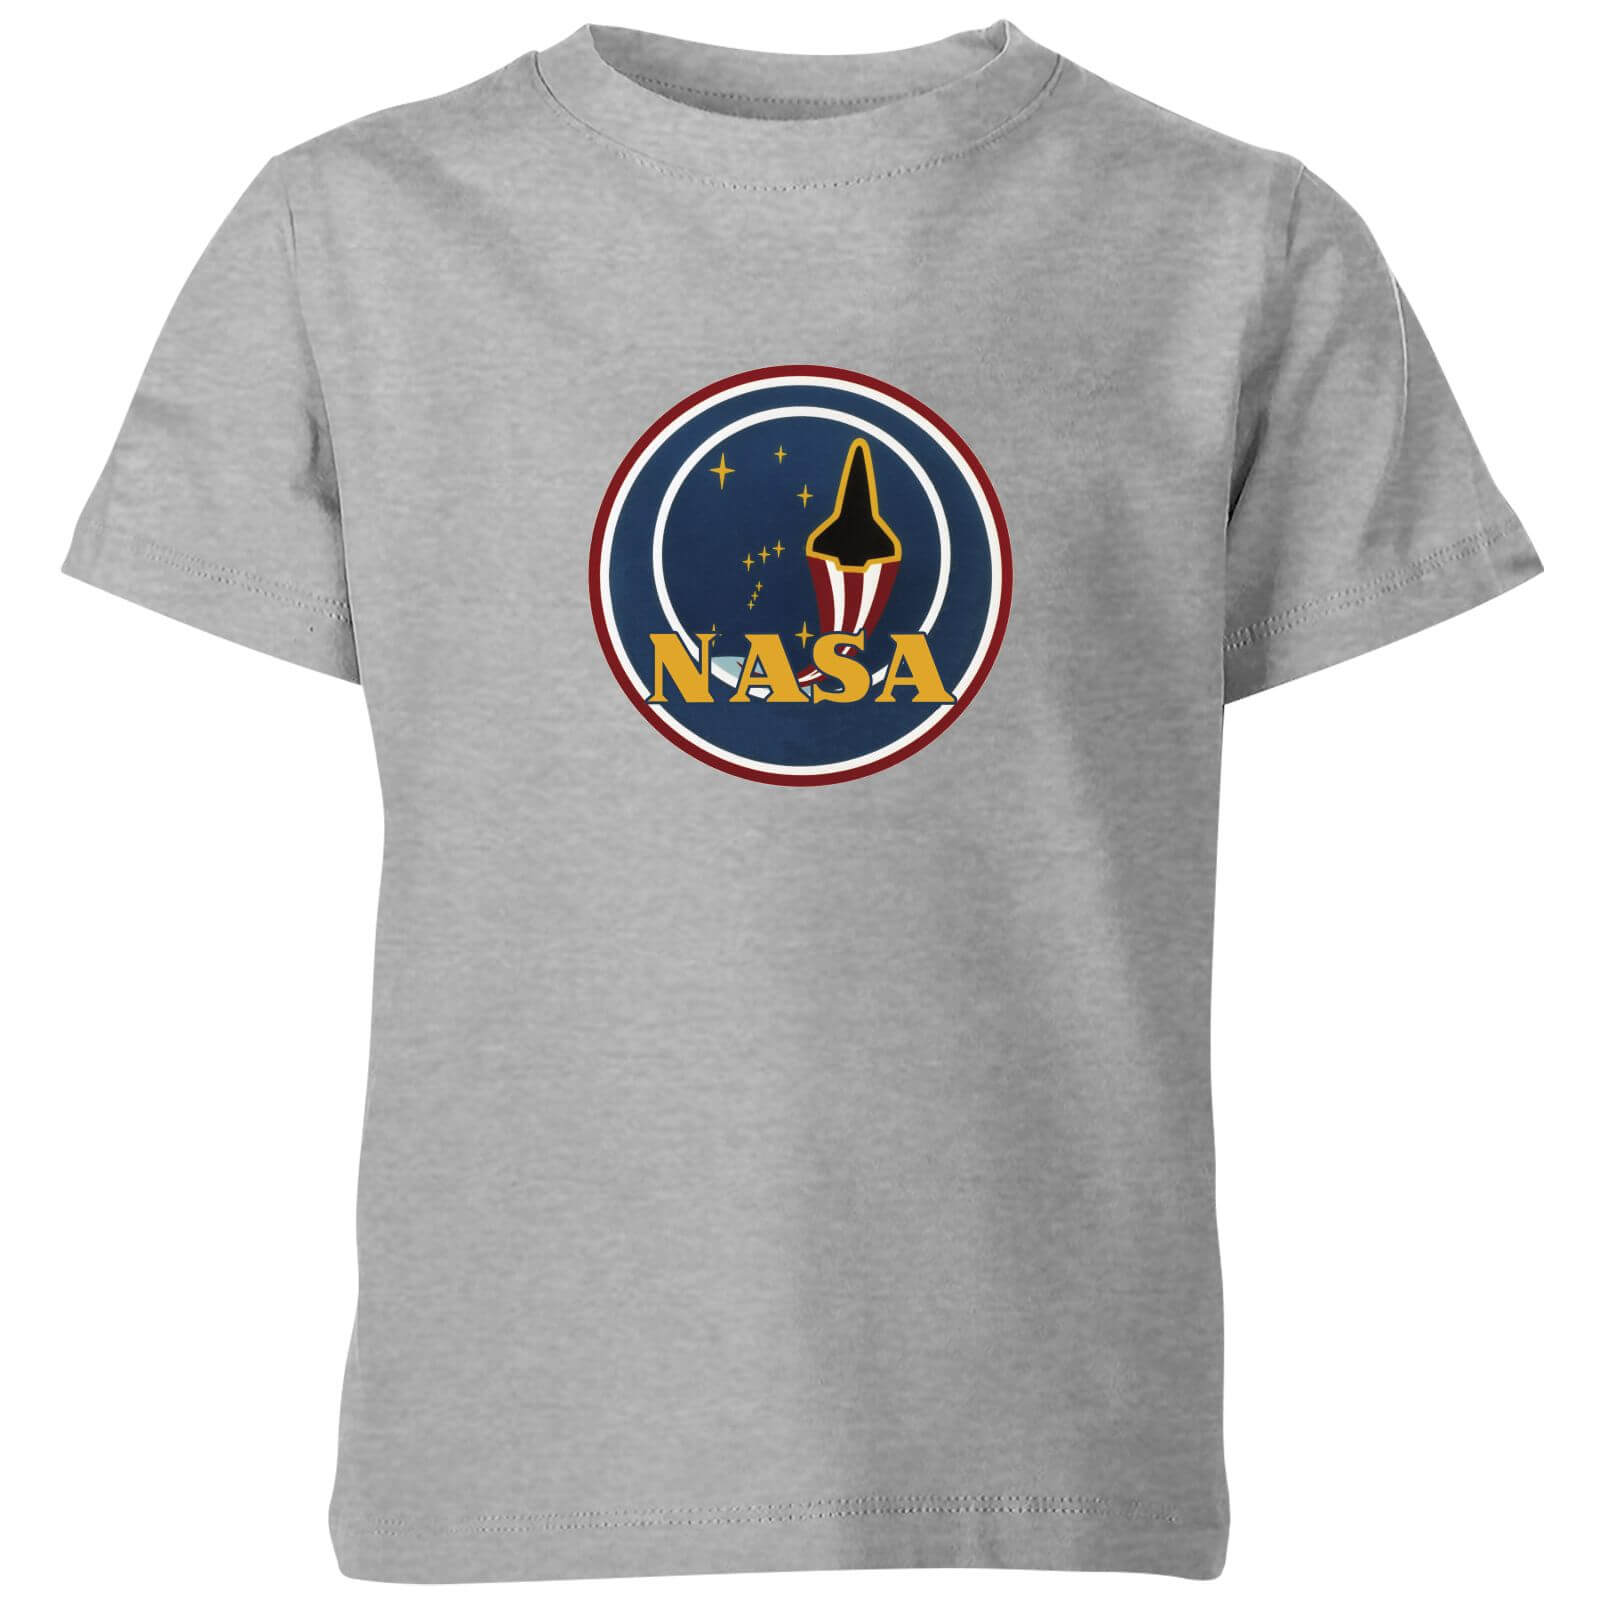 NASA JM Patch Kids' T-Shirt - Grey - 11-12 Years - Grey